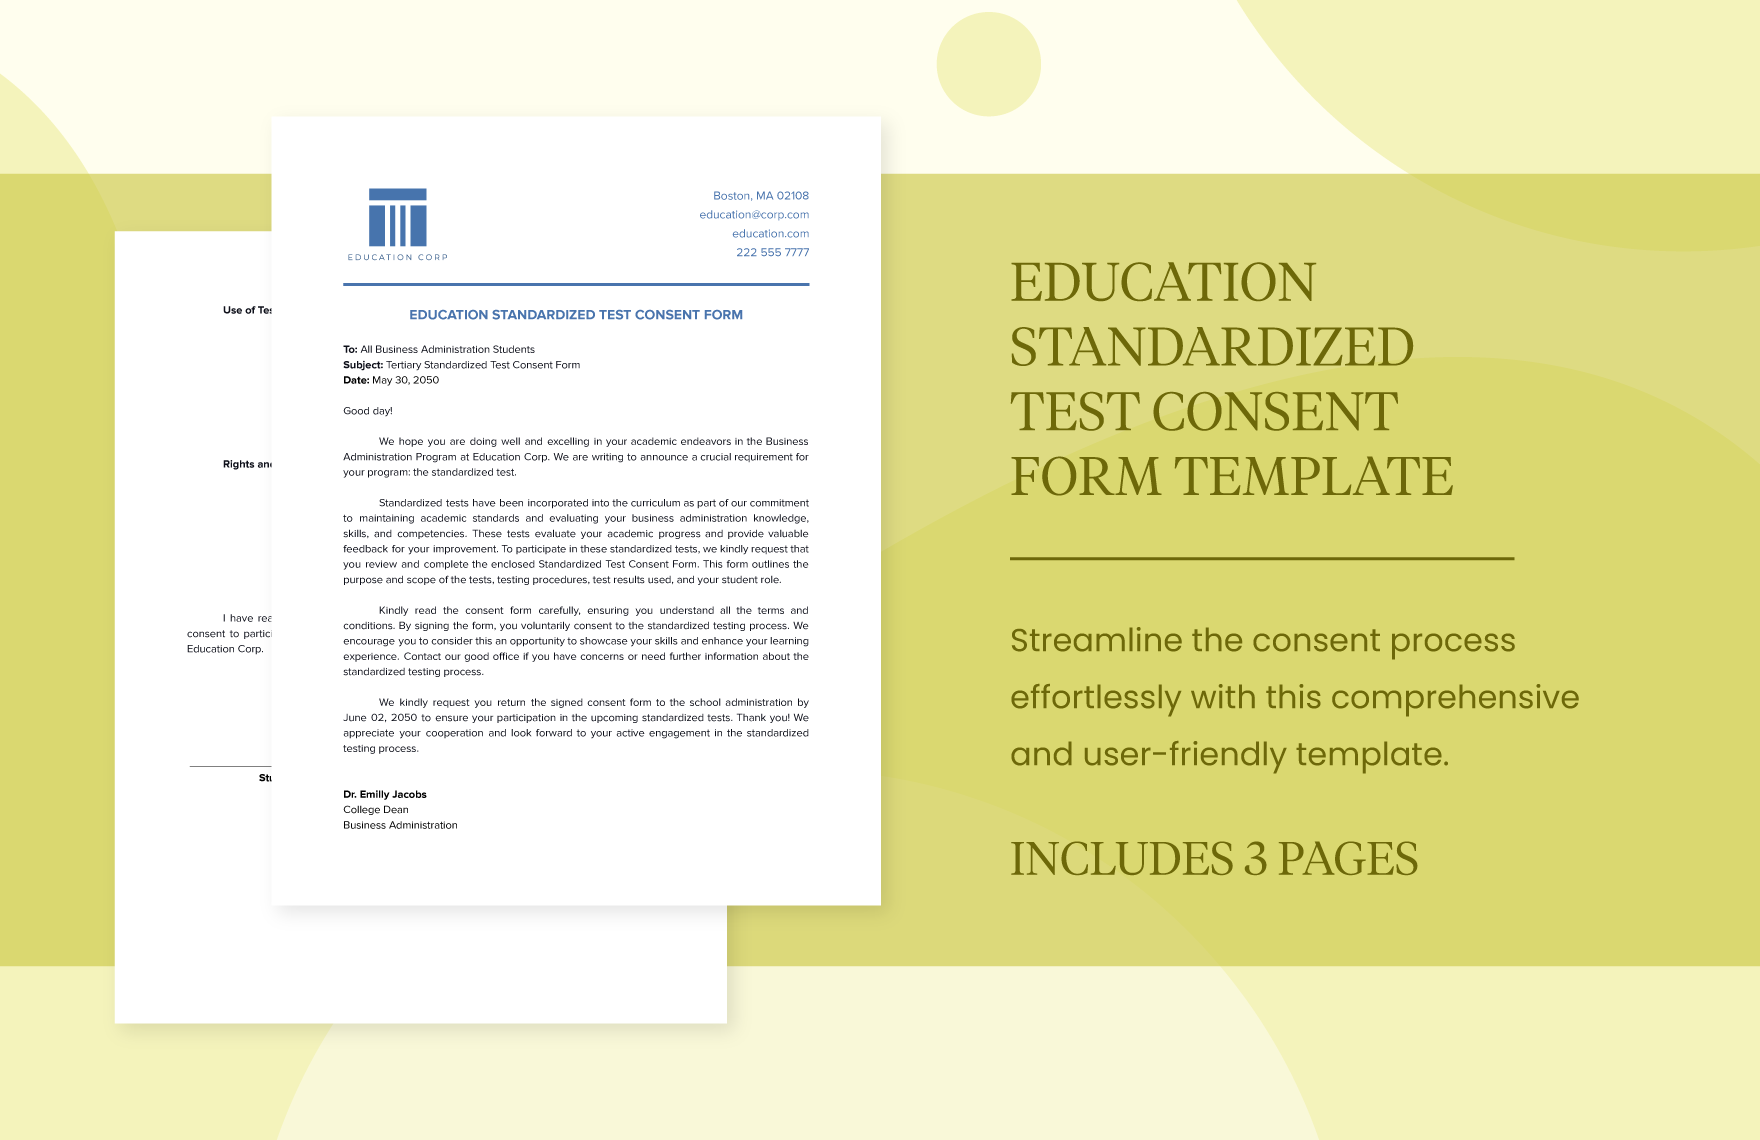 Education Standardized Test Consent Form Template